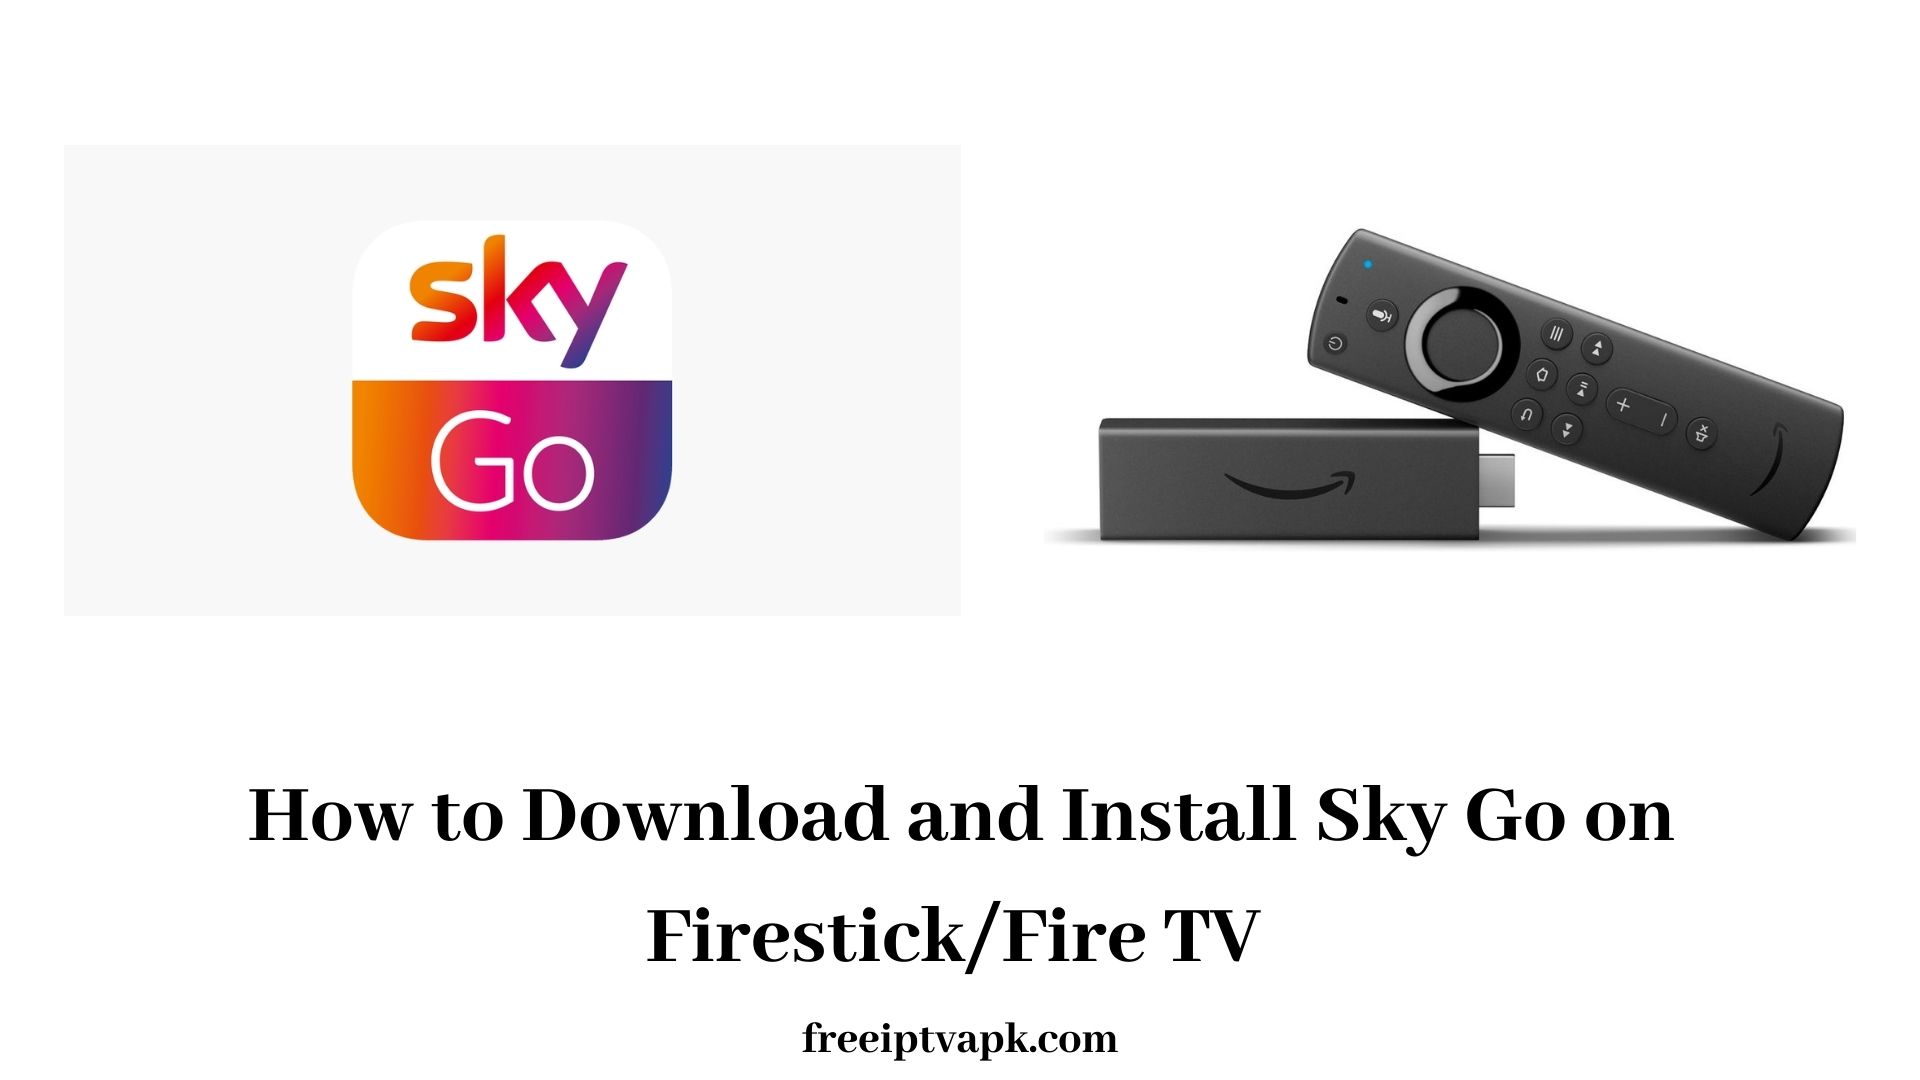 Sky Go on Firestick